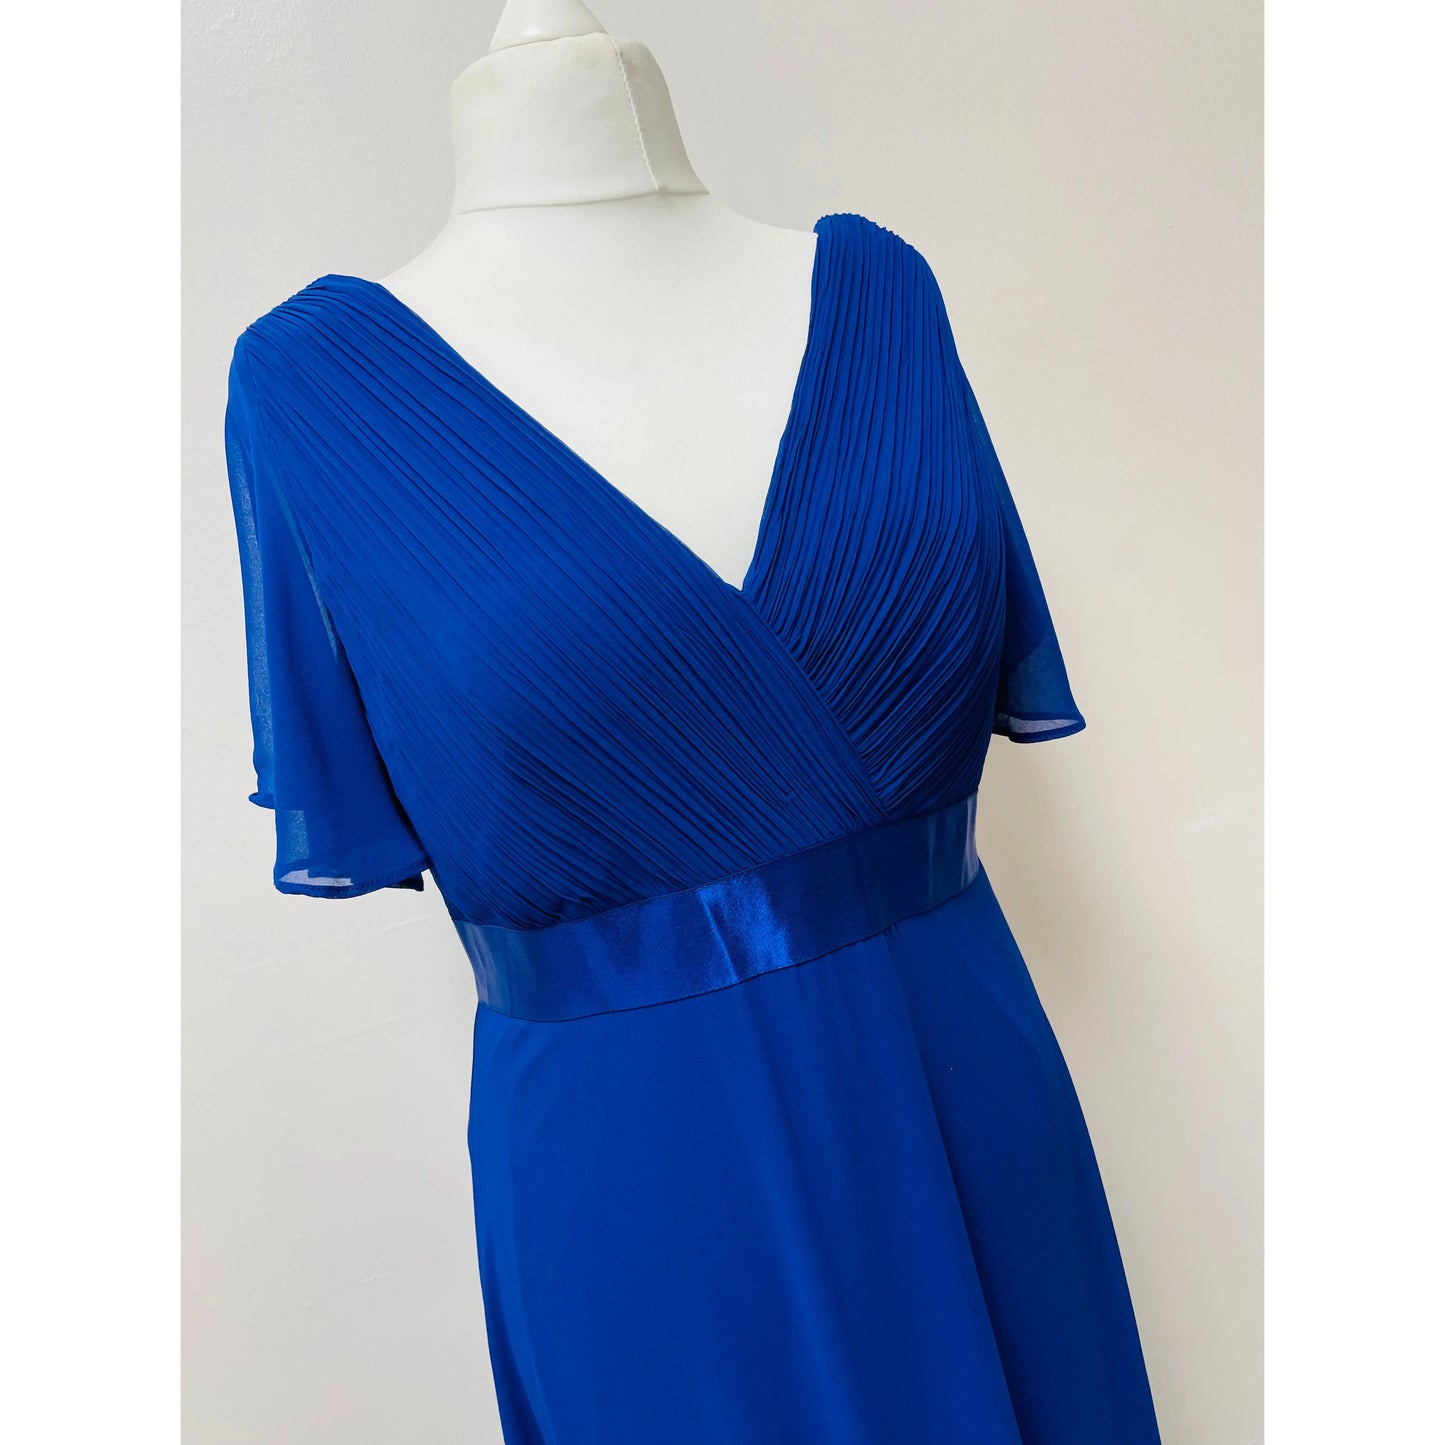 Ava Bridesmaid Dress - Bright Blue